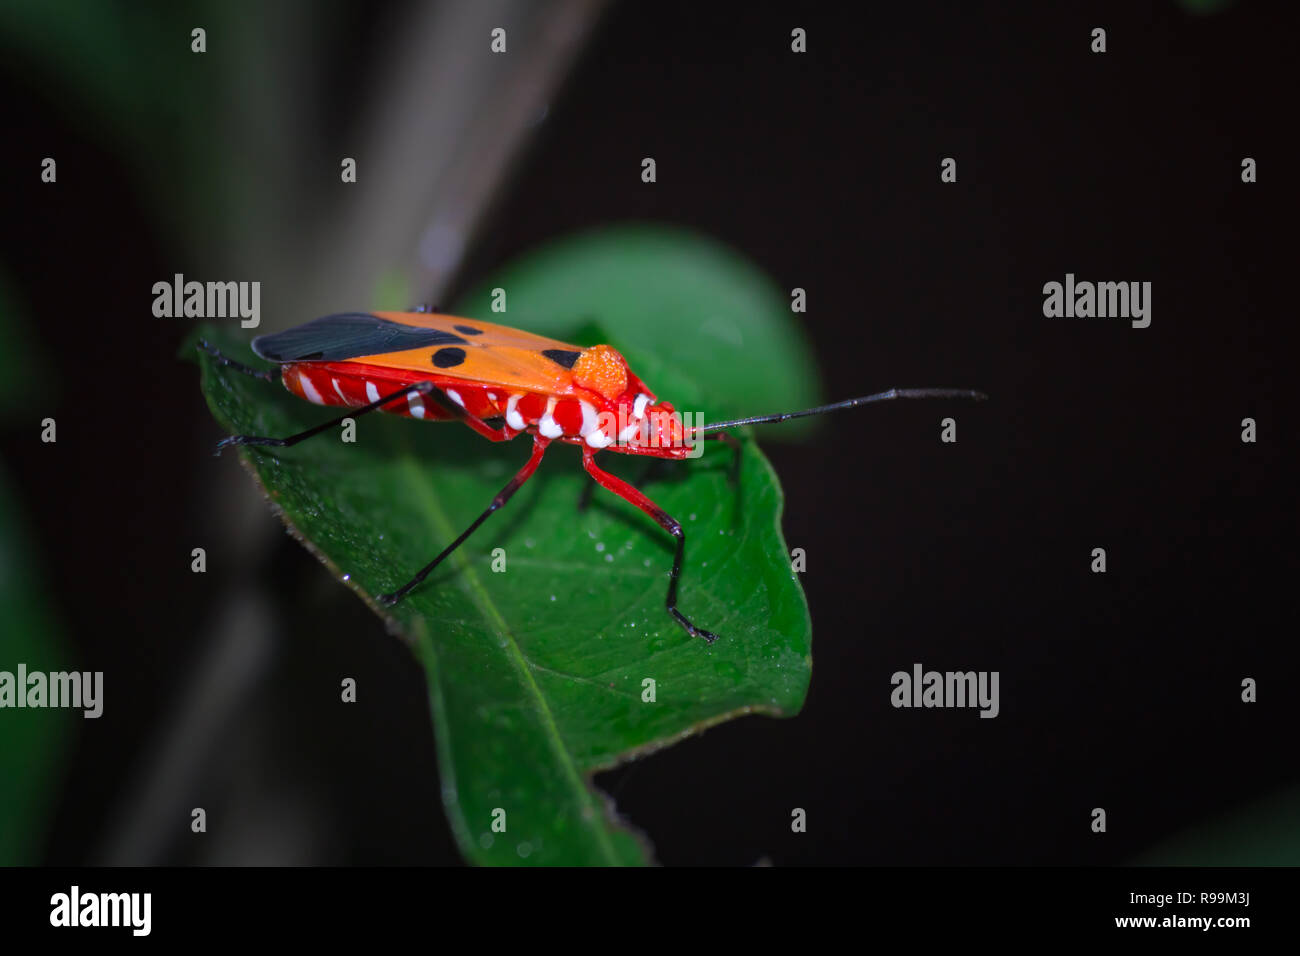 Red Cotton Bug - Mating Dysdercus cingulatus Stock Photo